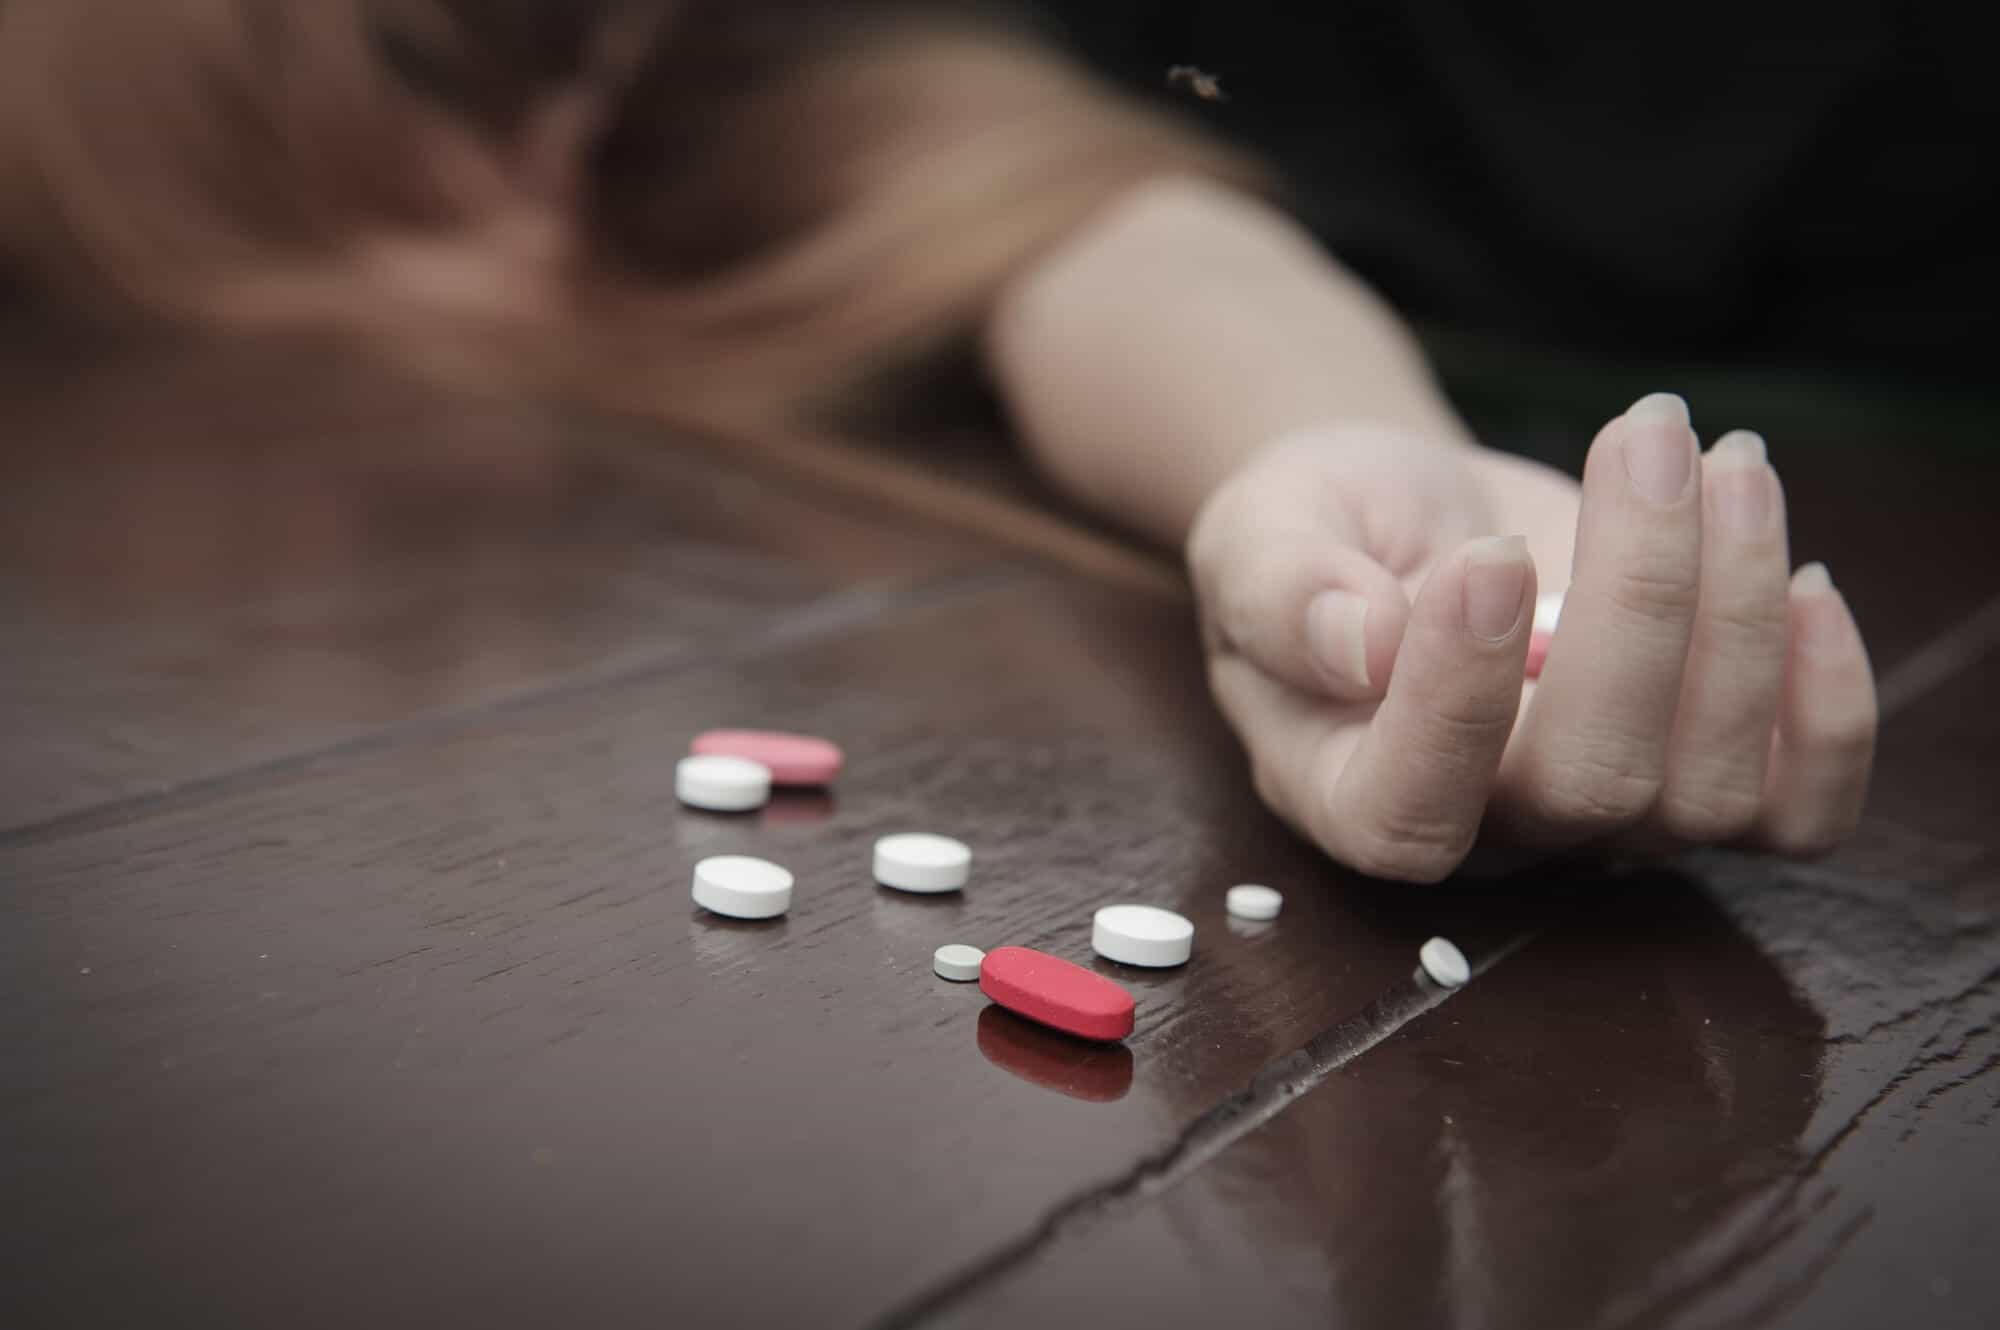 Animal Sedatives Causing Rise In Fatal Drug Overdoses